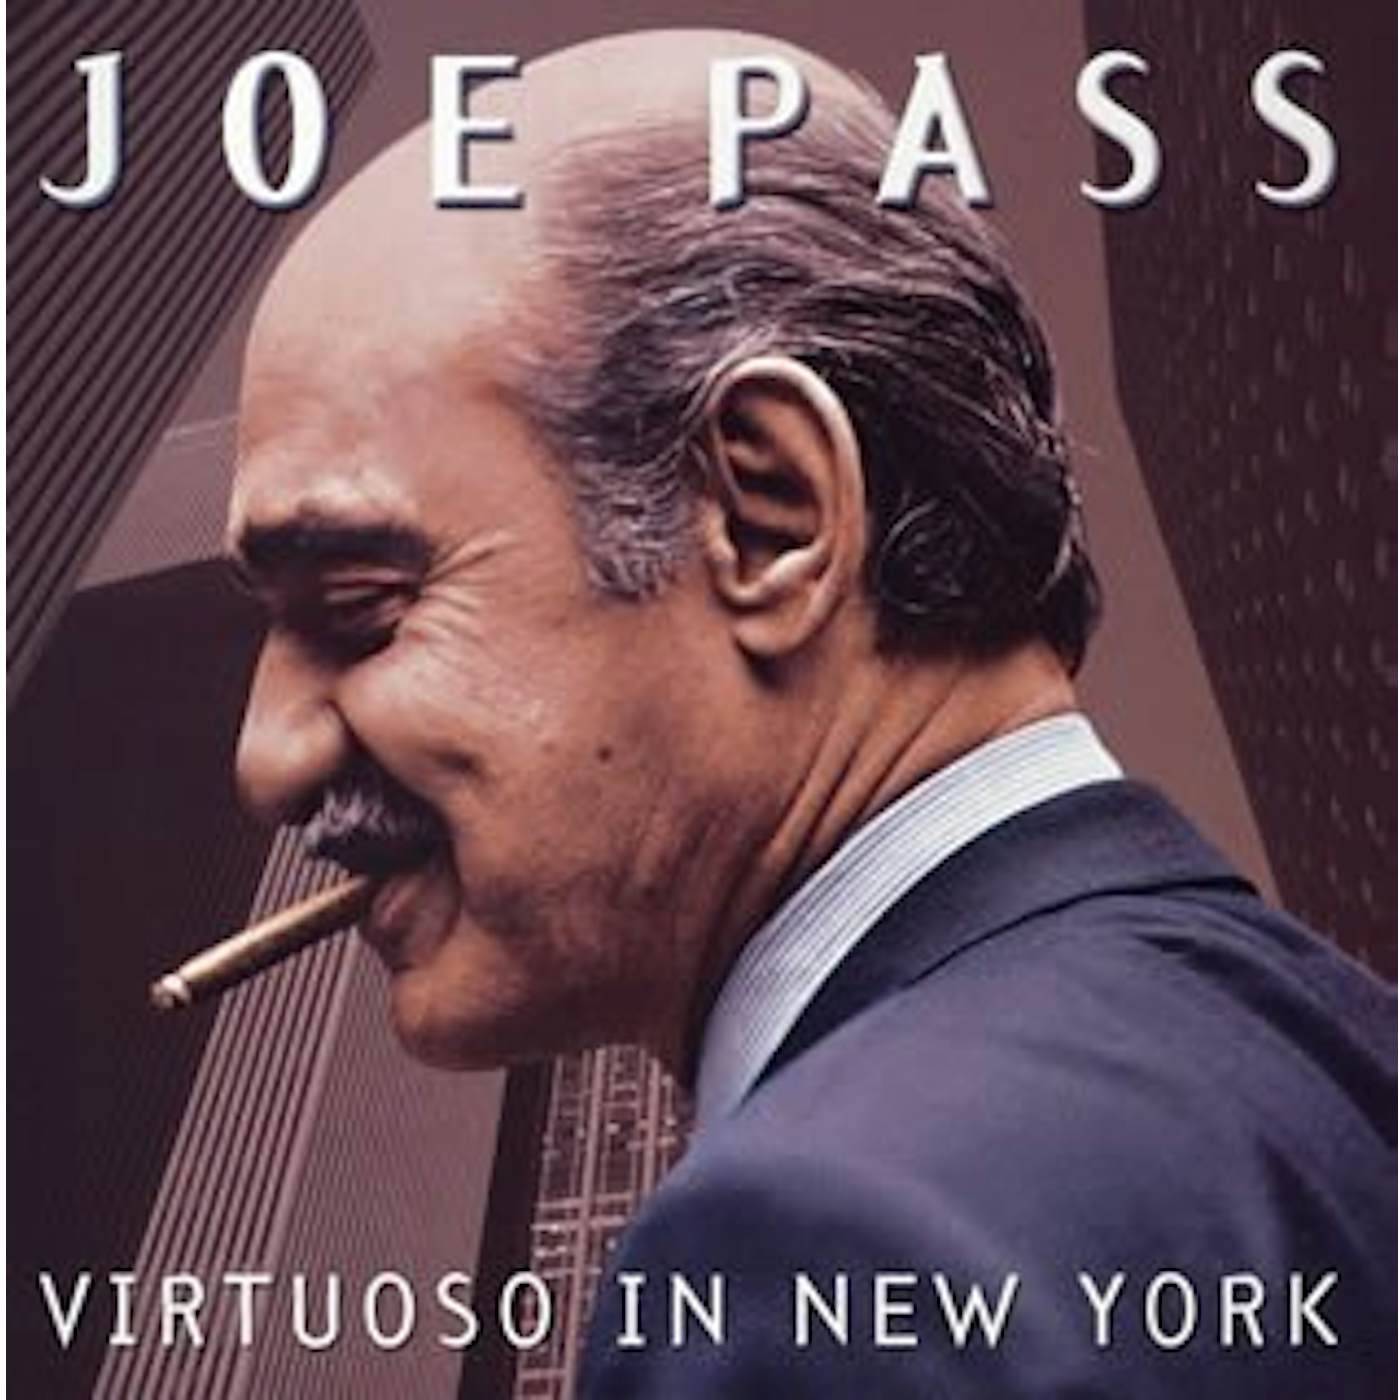 Joe Pass VIRTUSSO IN NEW YORK CD